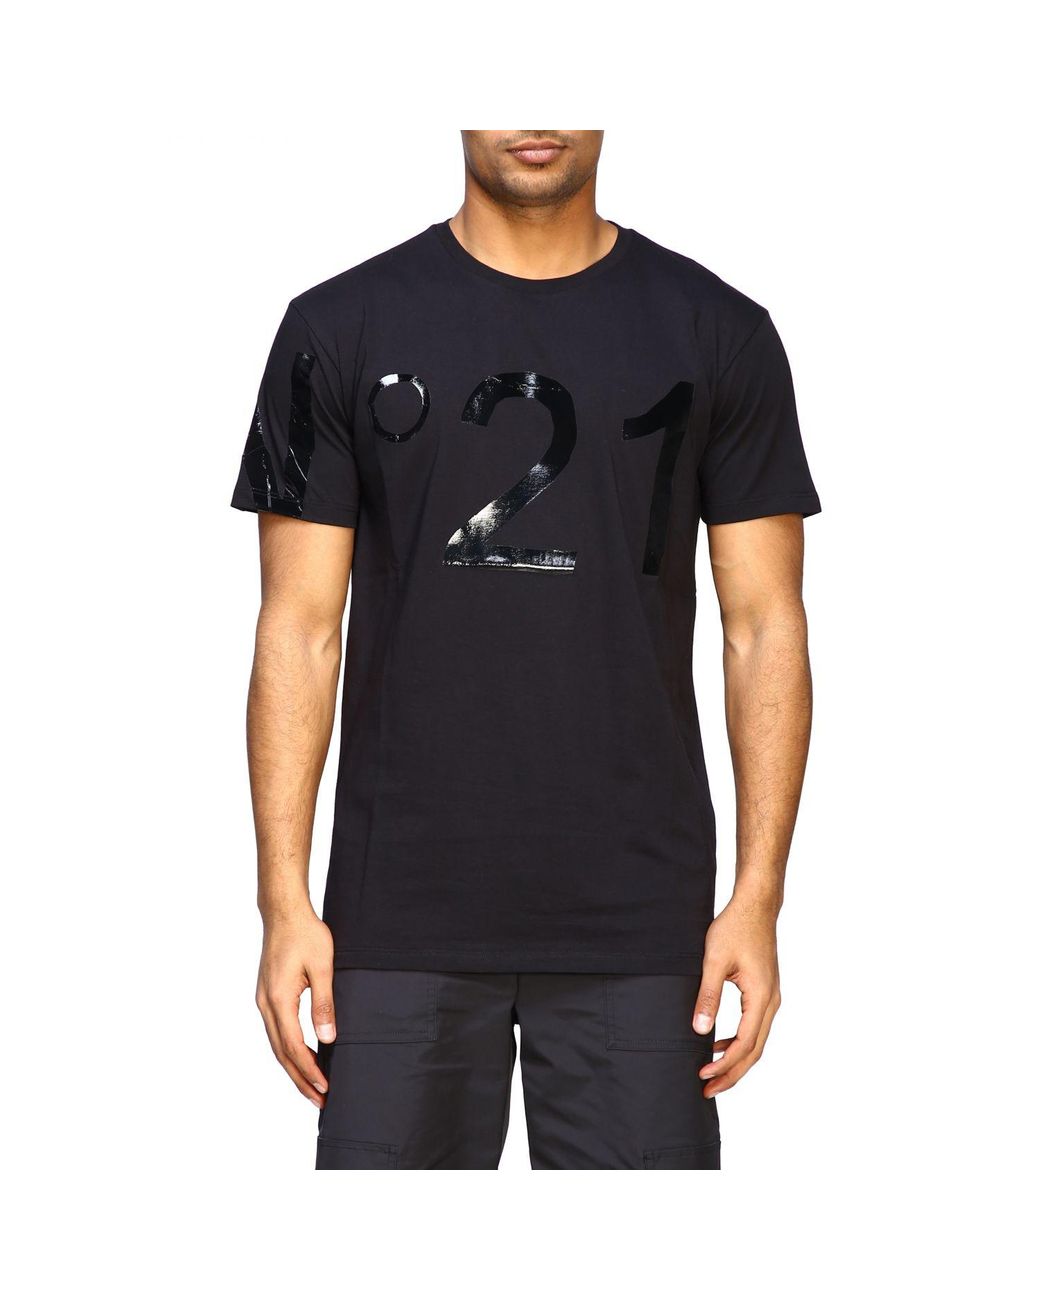 N°21 Cotton T-shirt in Black for Men - Lyst